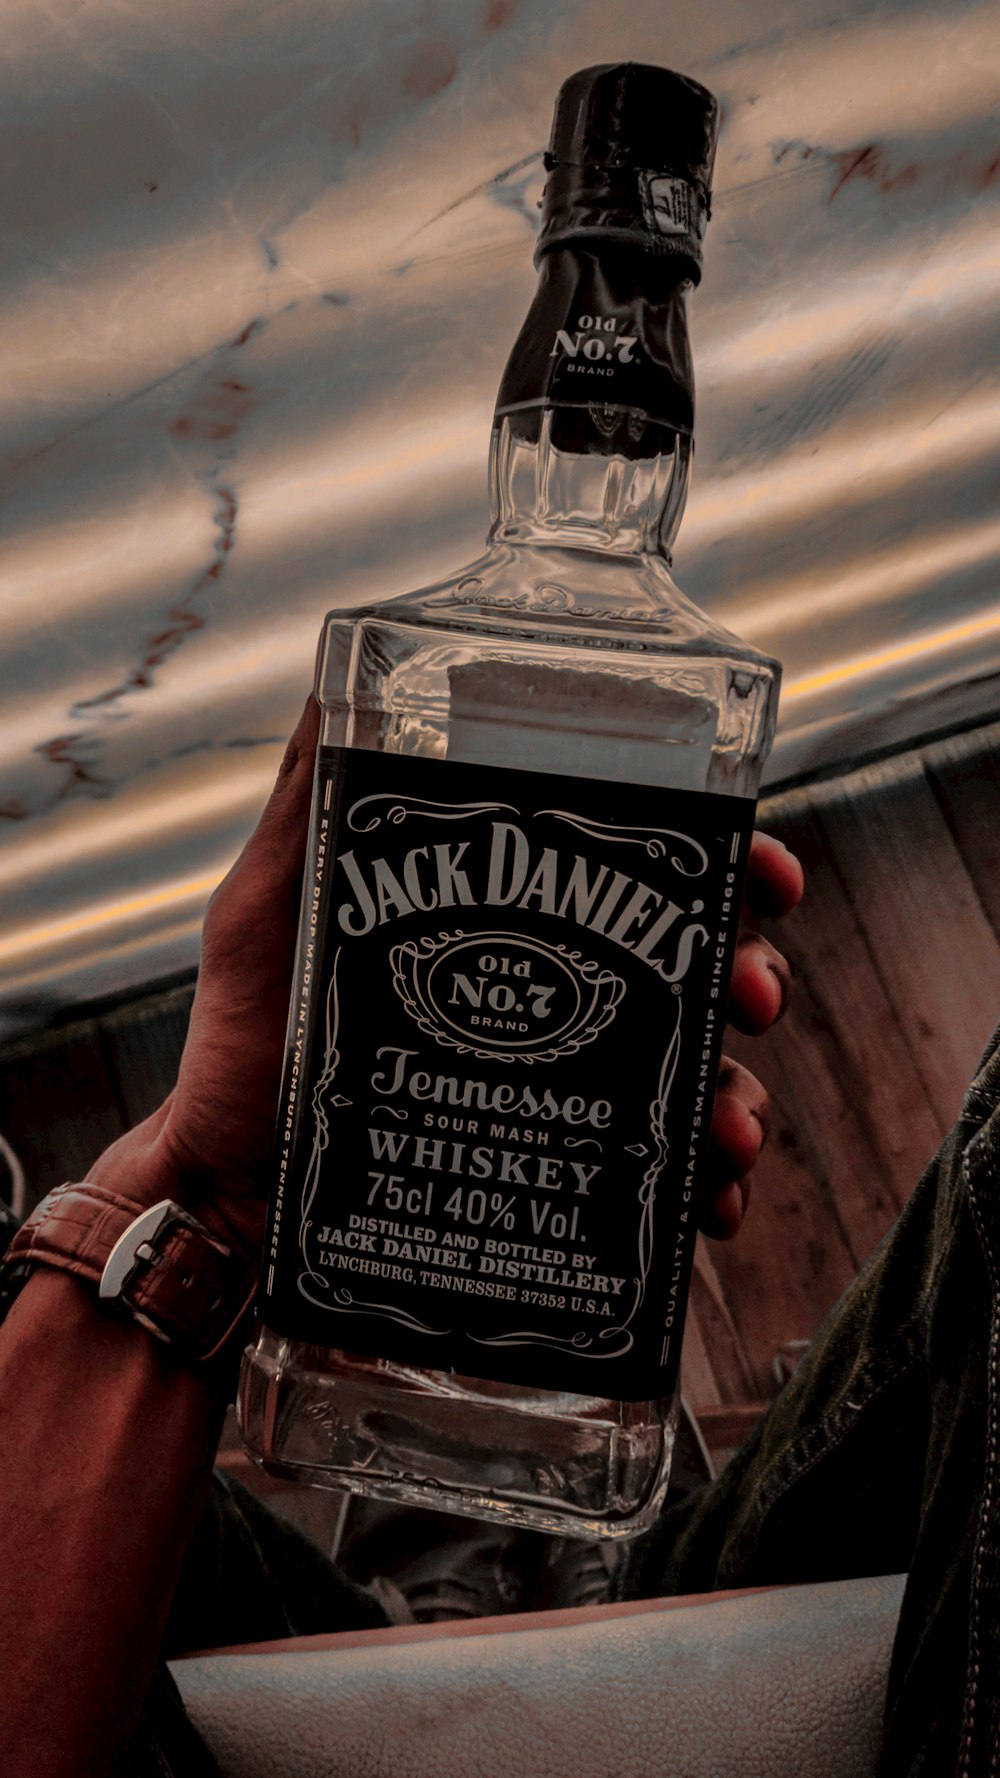 Jack daniels tennessee whiskey bottle photo – Free Drink Image on Unsplash